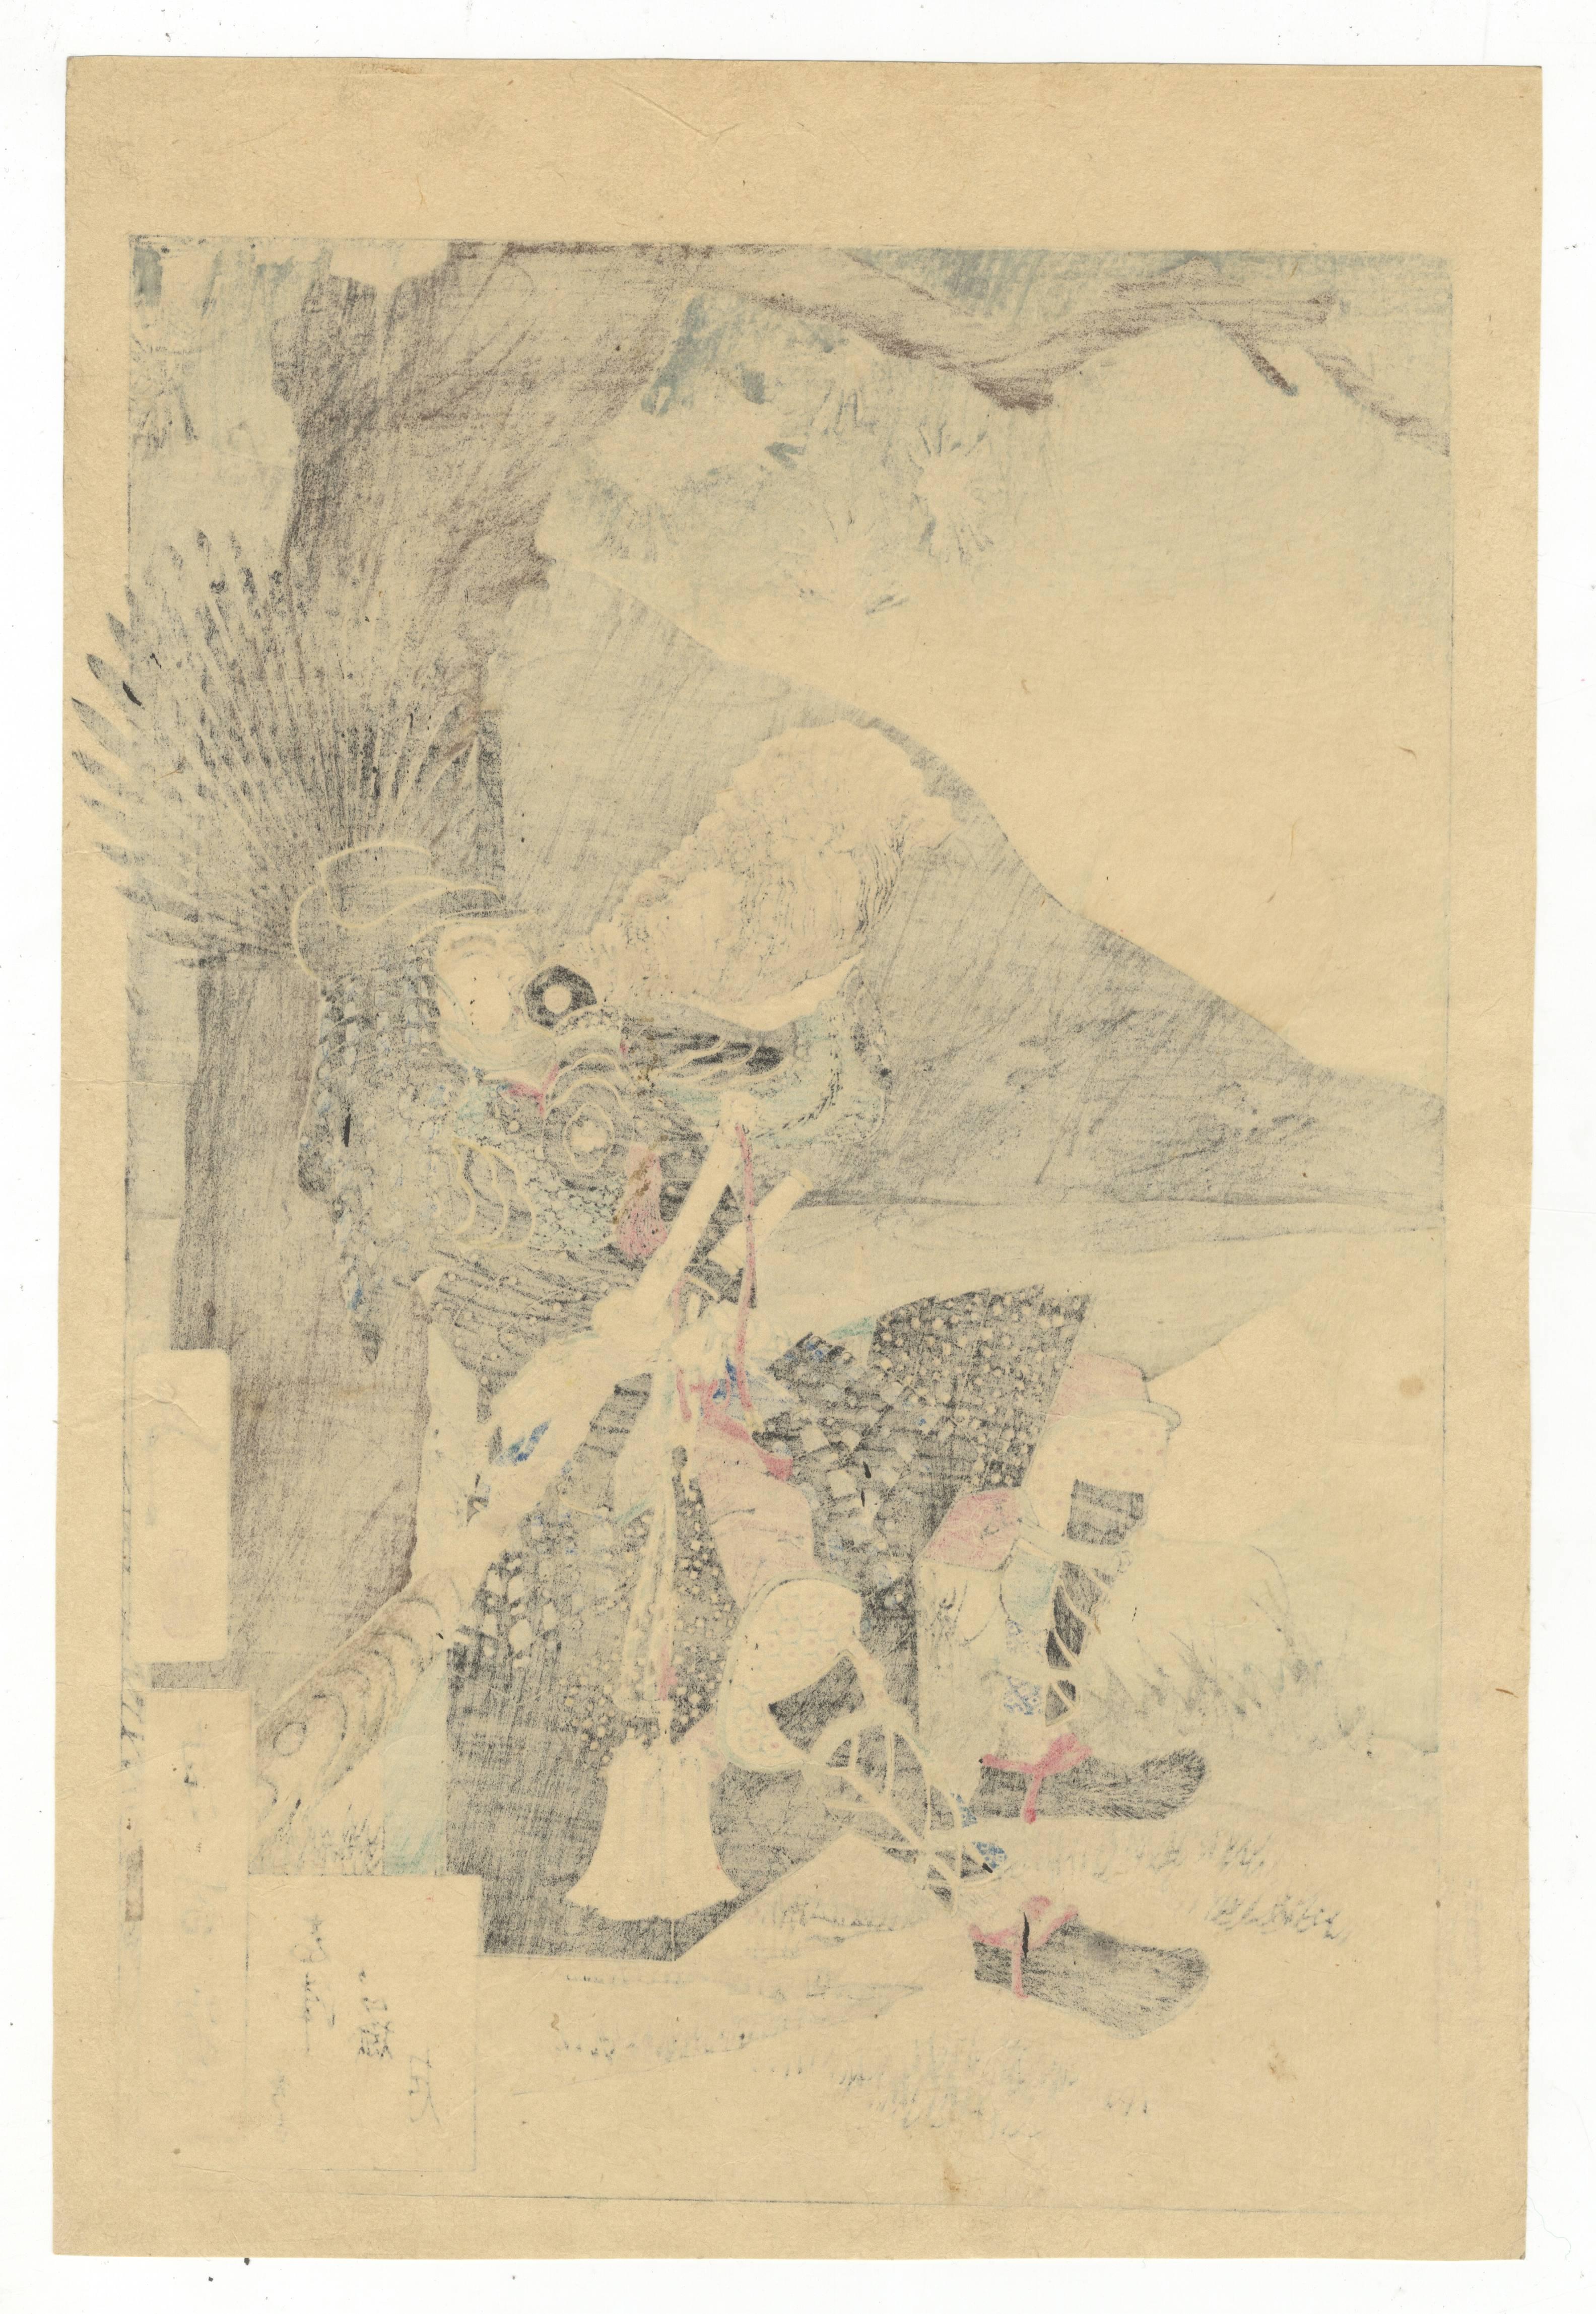 Artist: Yoshitoshi Tsukioka (1839 - 1892)
Title: Shizu Peak Moon (Hideyoshi)
Series: One Hundred Aspects of the Moon
Publisher: Akiyama Buemon
Published: 1888

This print shows Toyotomi Hideyoshi (1536 - 1598), one of Japan's greatest